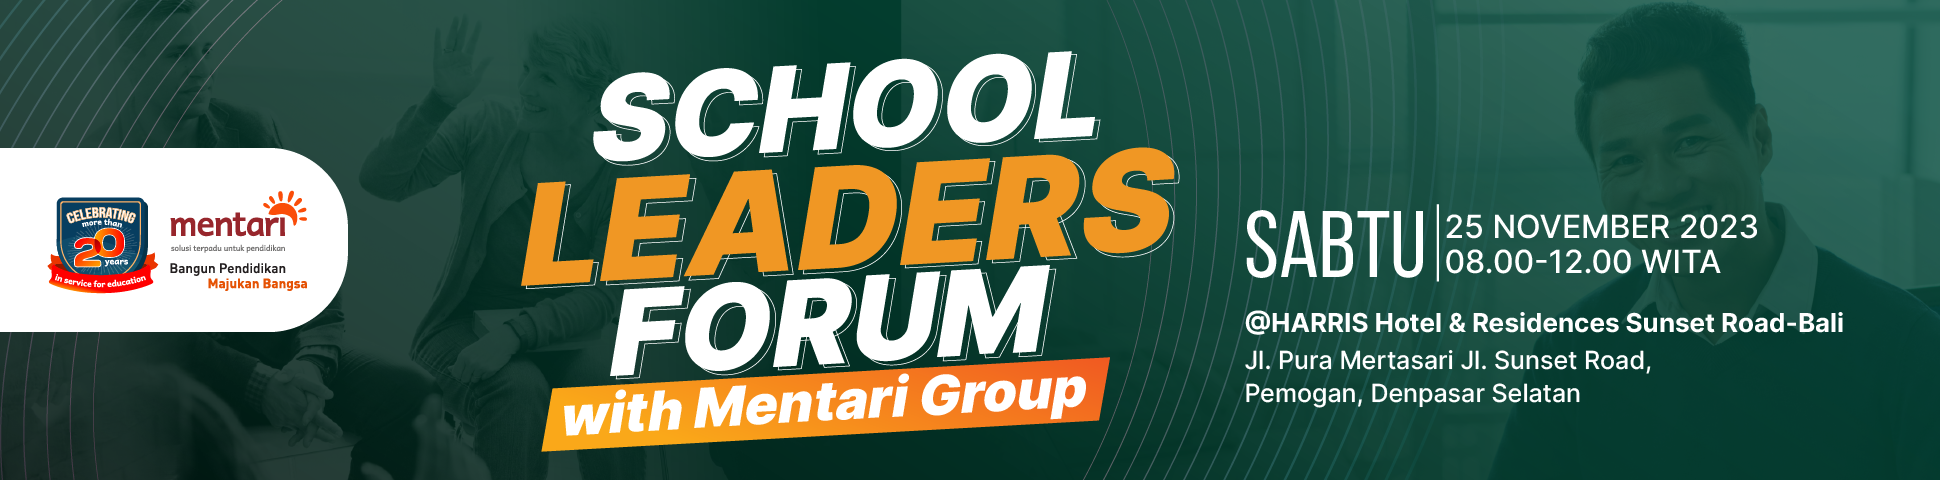 School Leaders Forum with Mentari Group 2023 - Bali